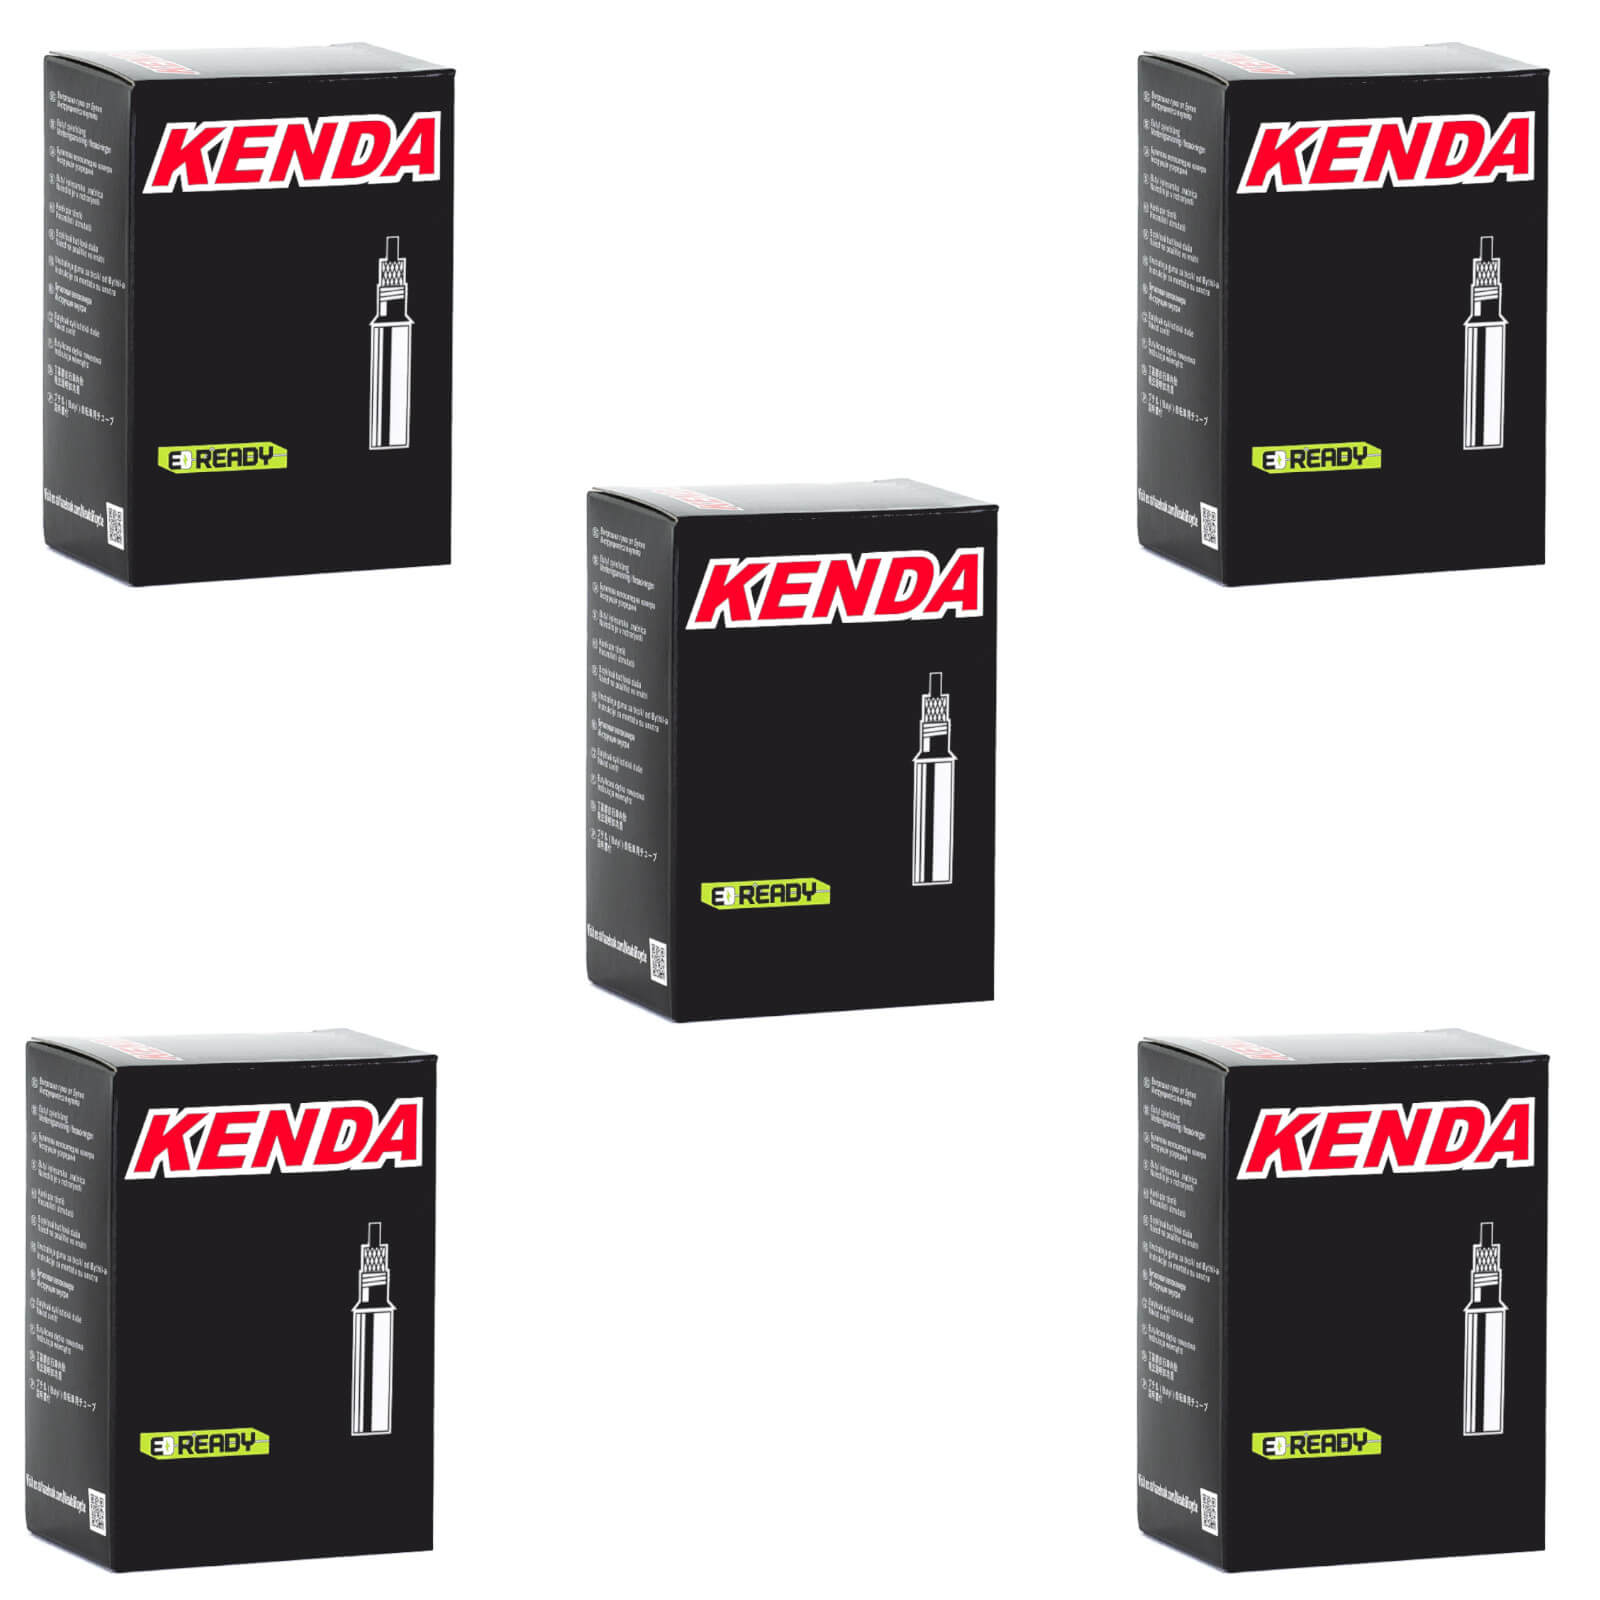 Kenda 27.5x2.0-2.4" 27.5 Inch Presta Valve Bike Inner Tube Pack of 5